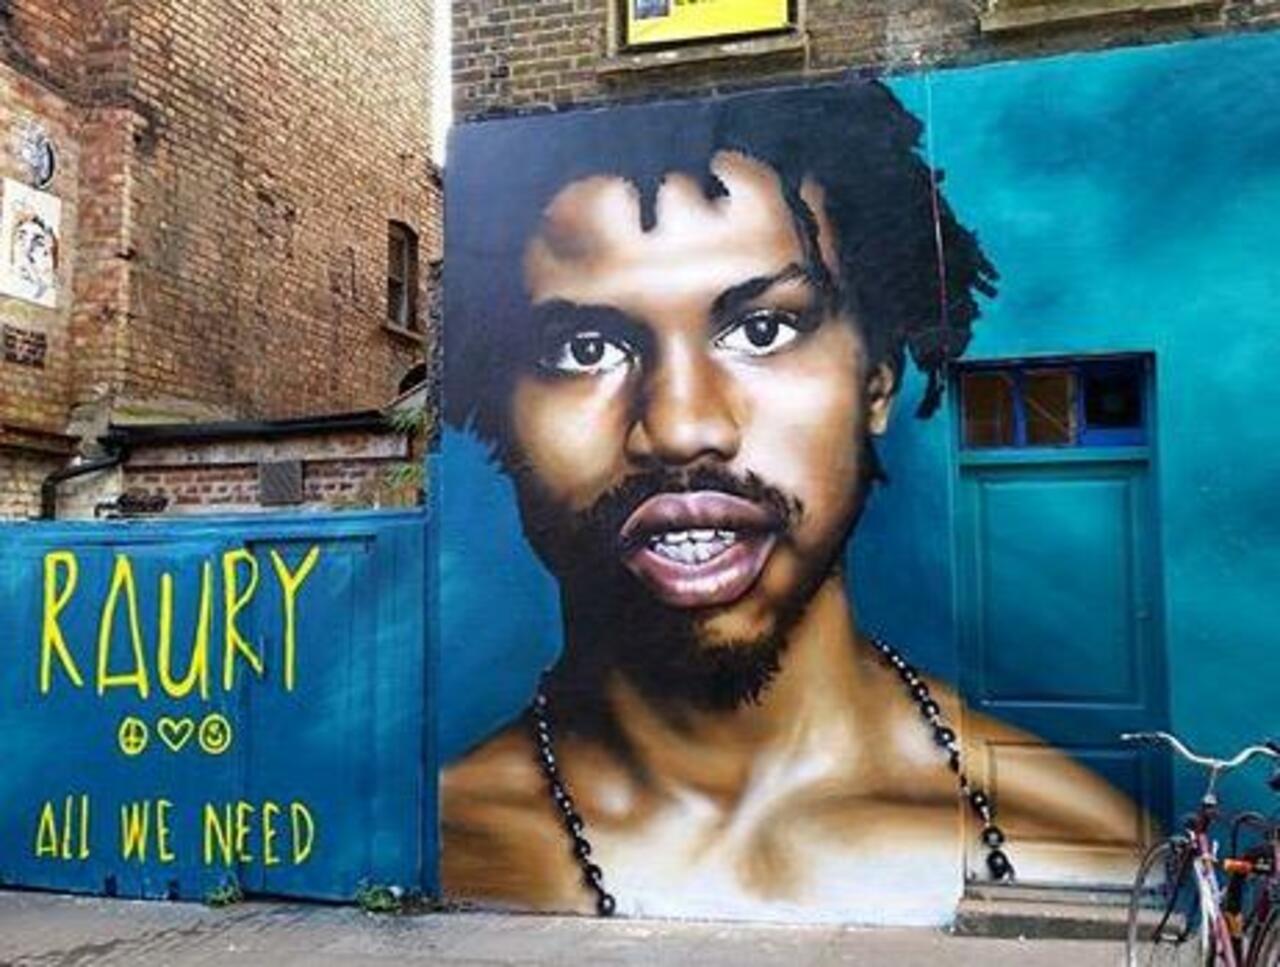 RT @artlife365: New Street Art of Raury by Olliver Switch in Brick Lane 

#art #graffiti #mural #streetart http://t.co/NjgJP0mKuD